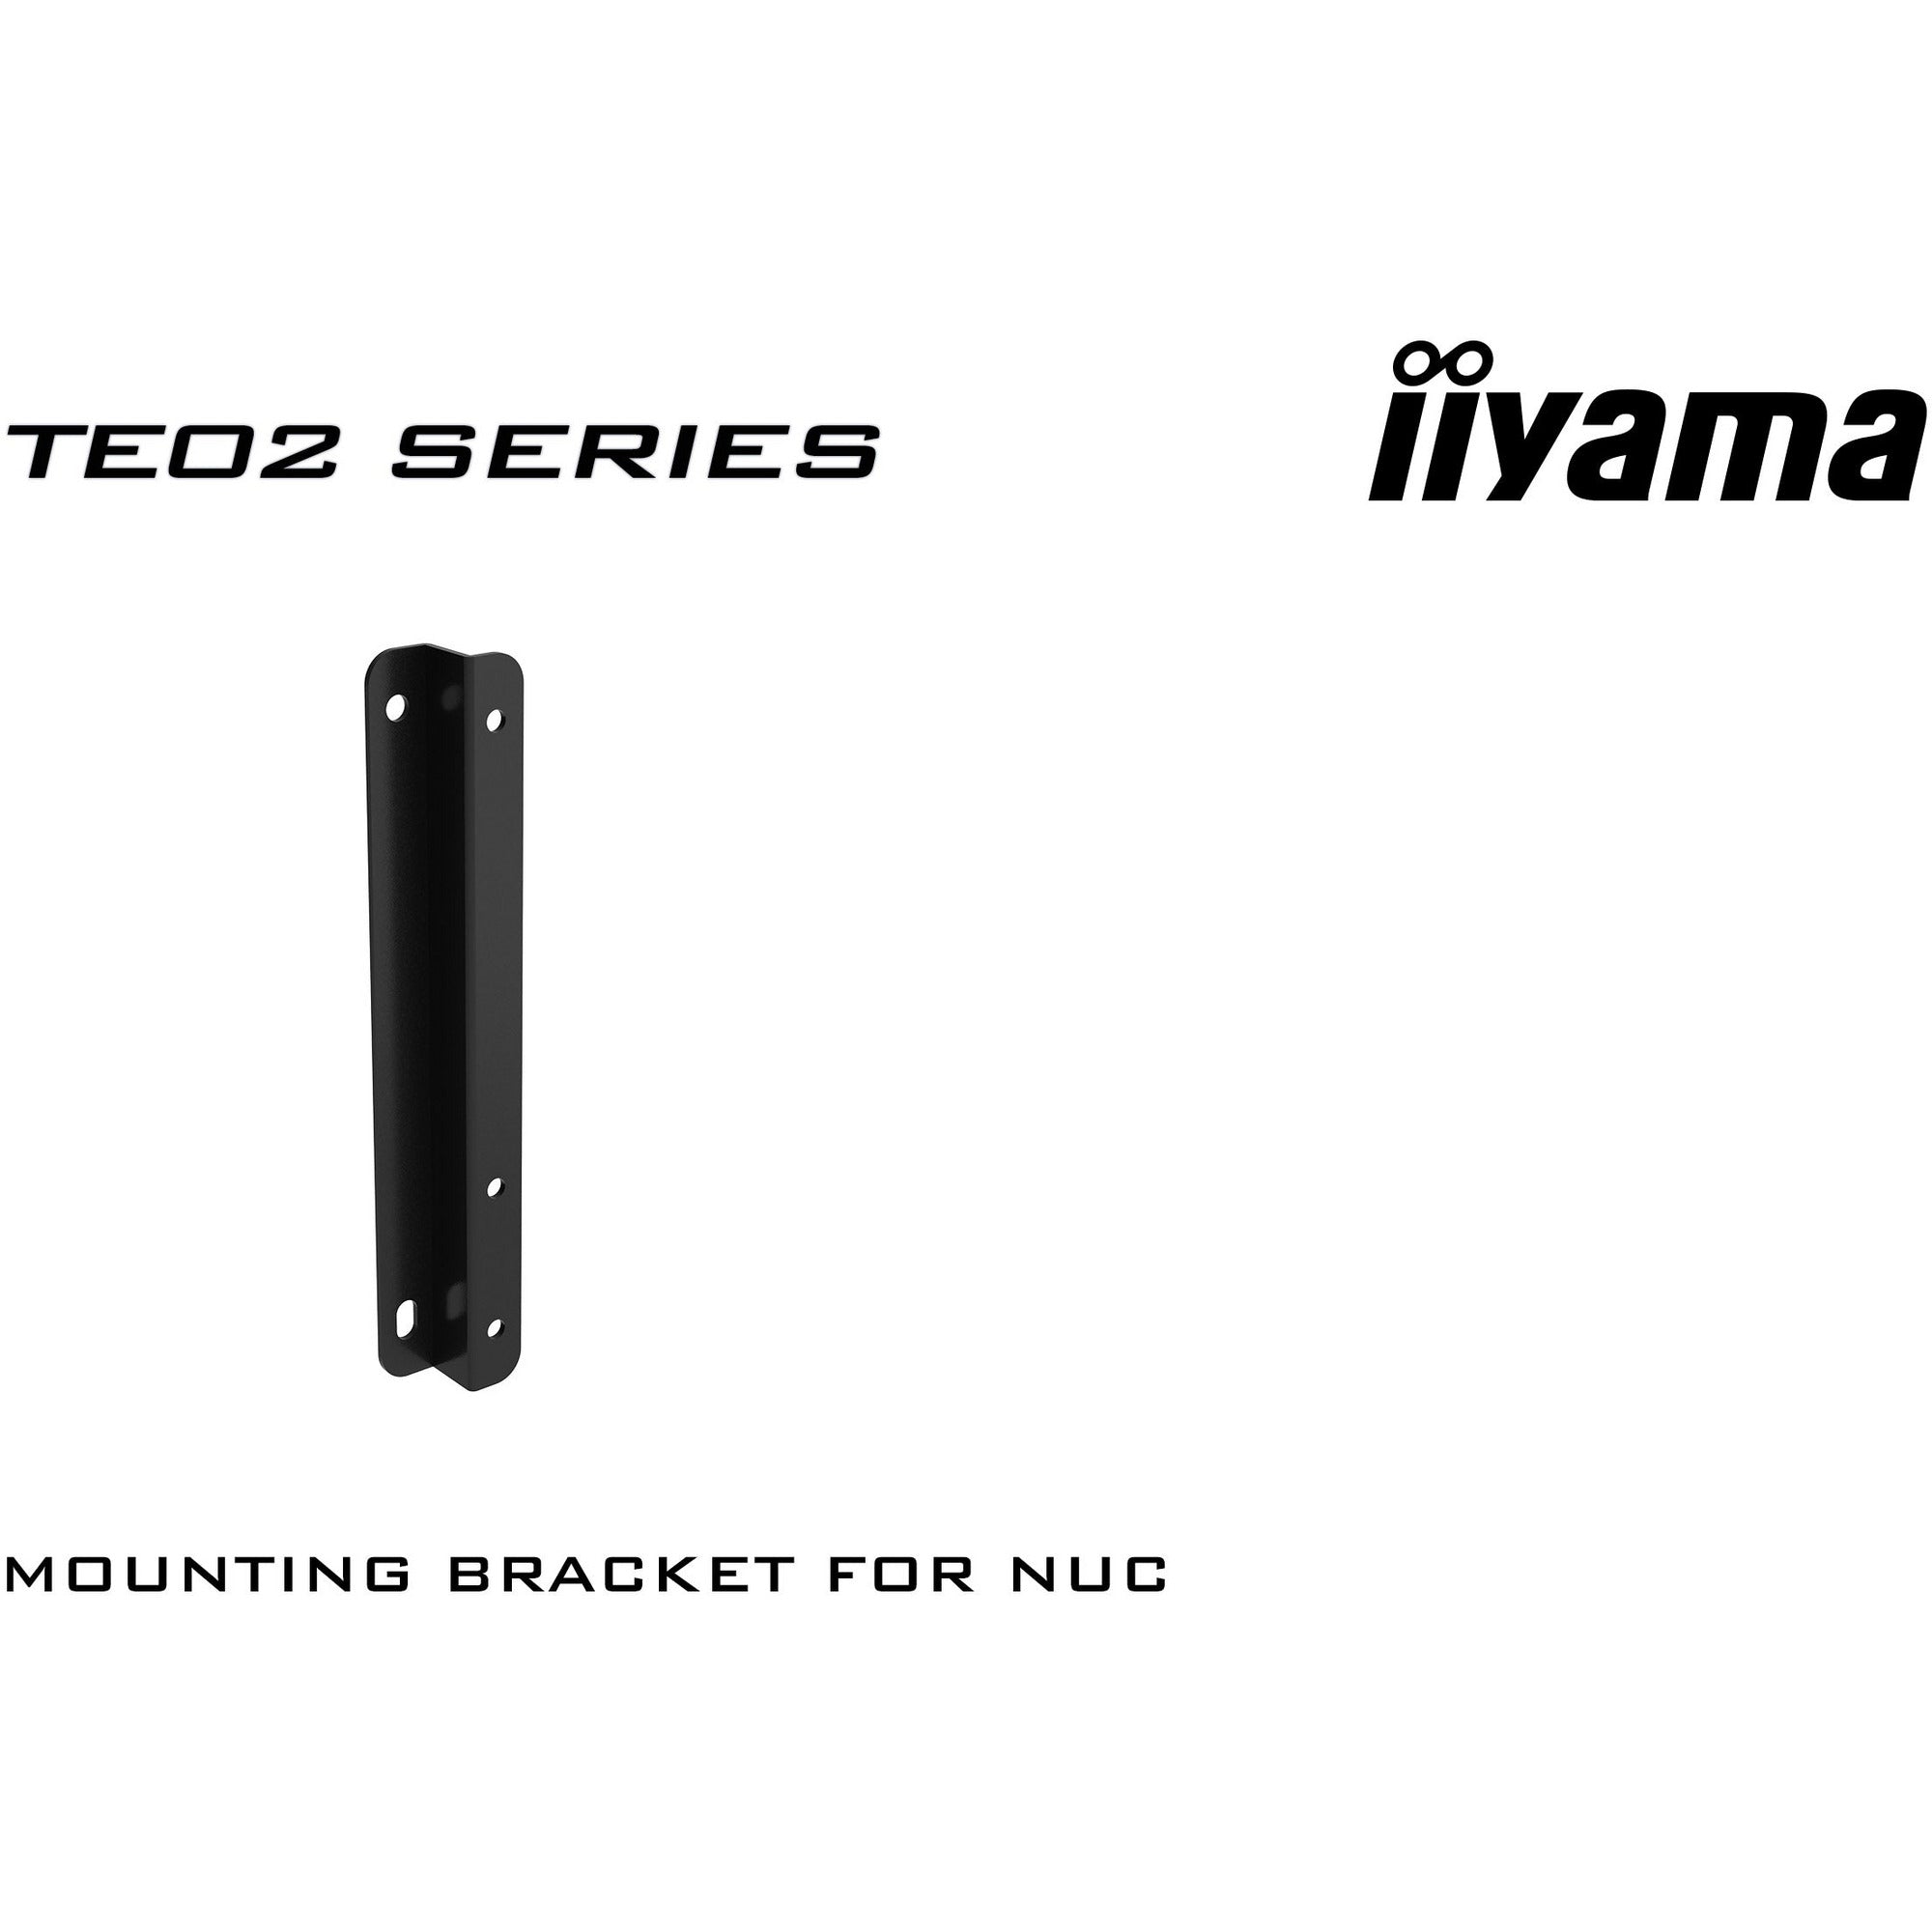 Iiyama ProLite TE8602MIS-B1AG 86’’ 4K UHD LCD Touchscreen with Integrated Whiteboard Software